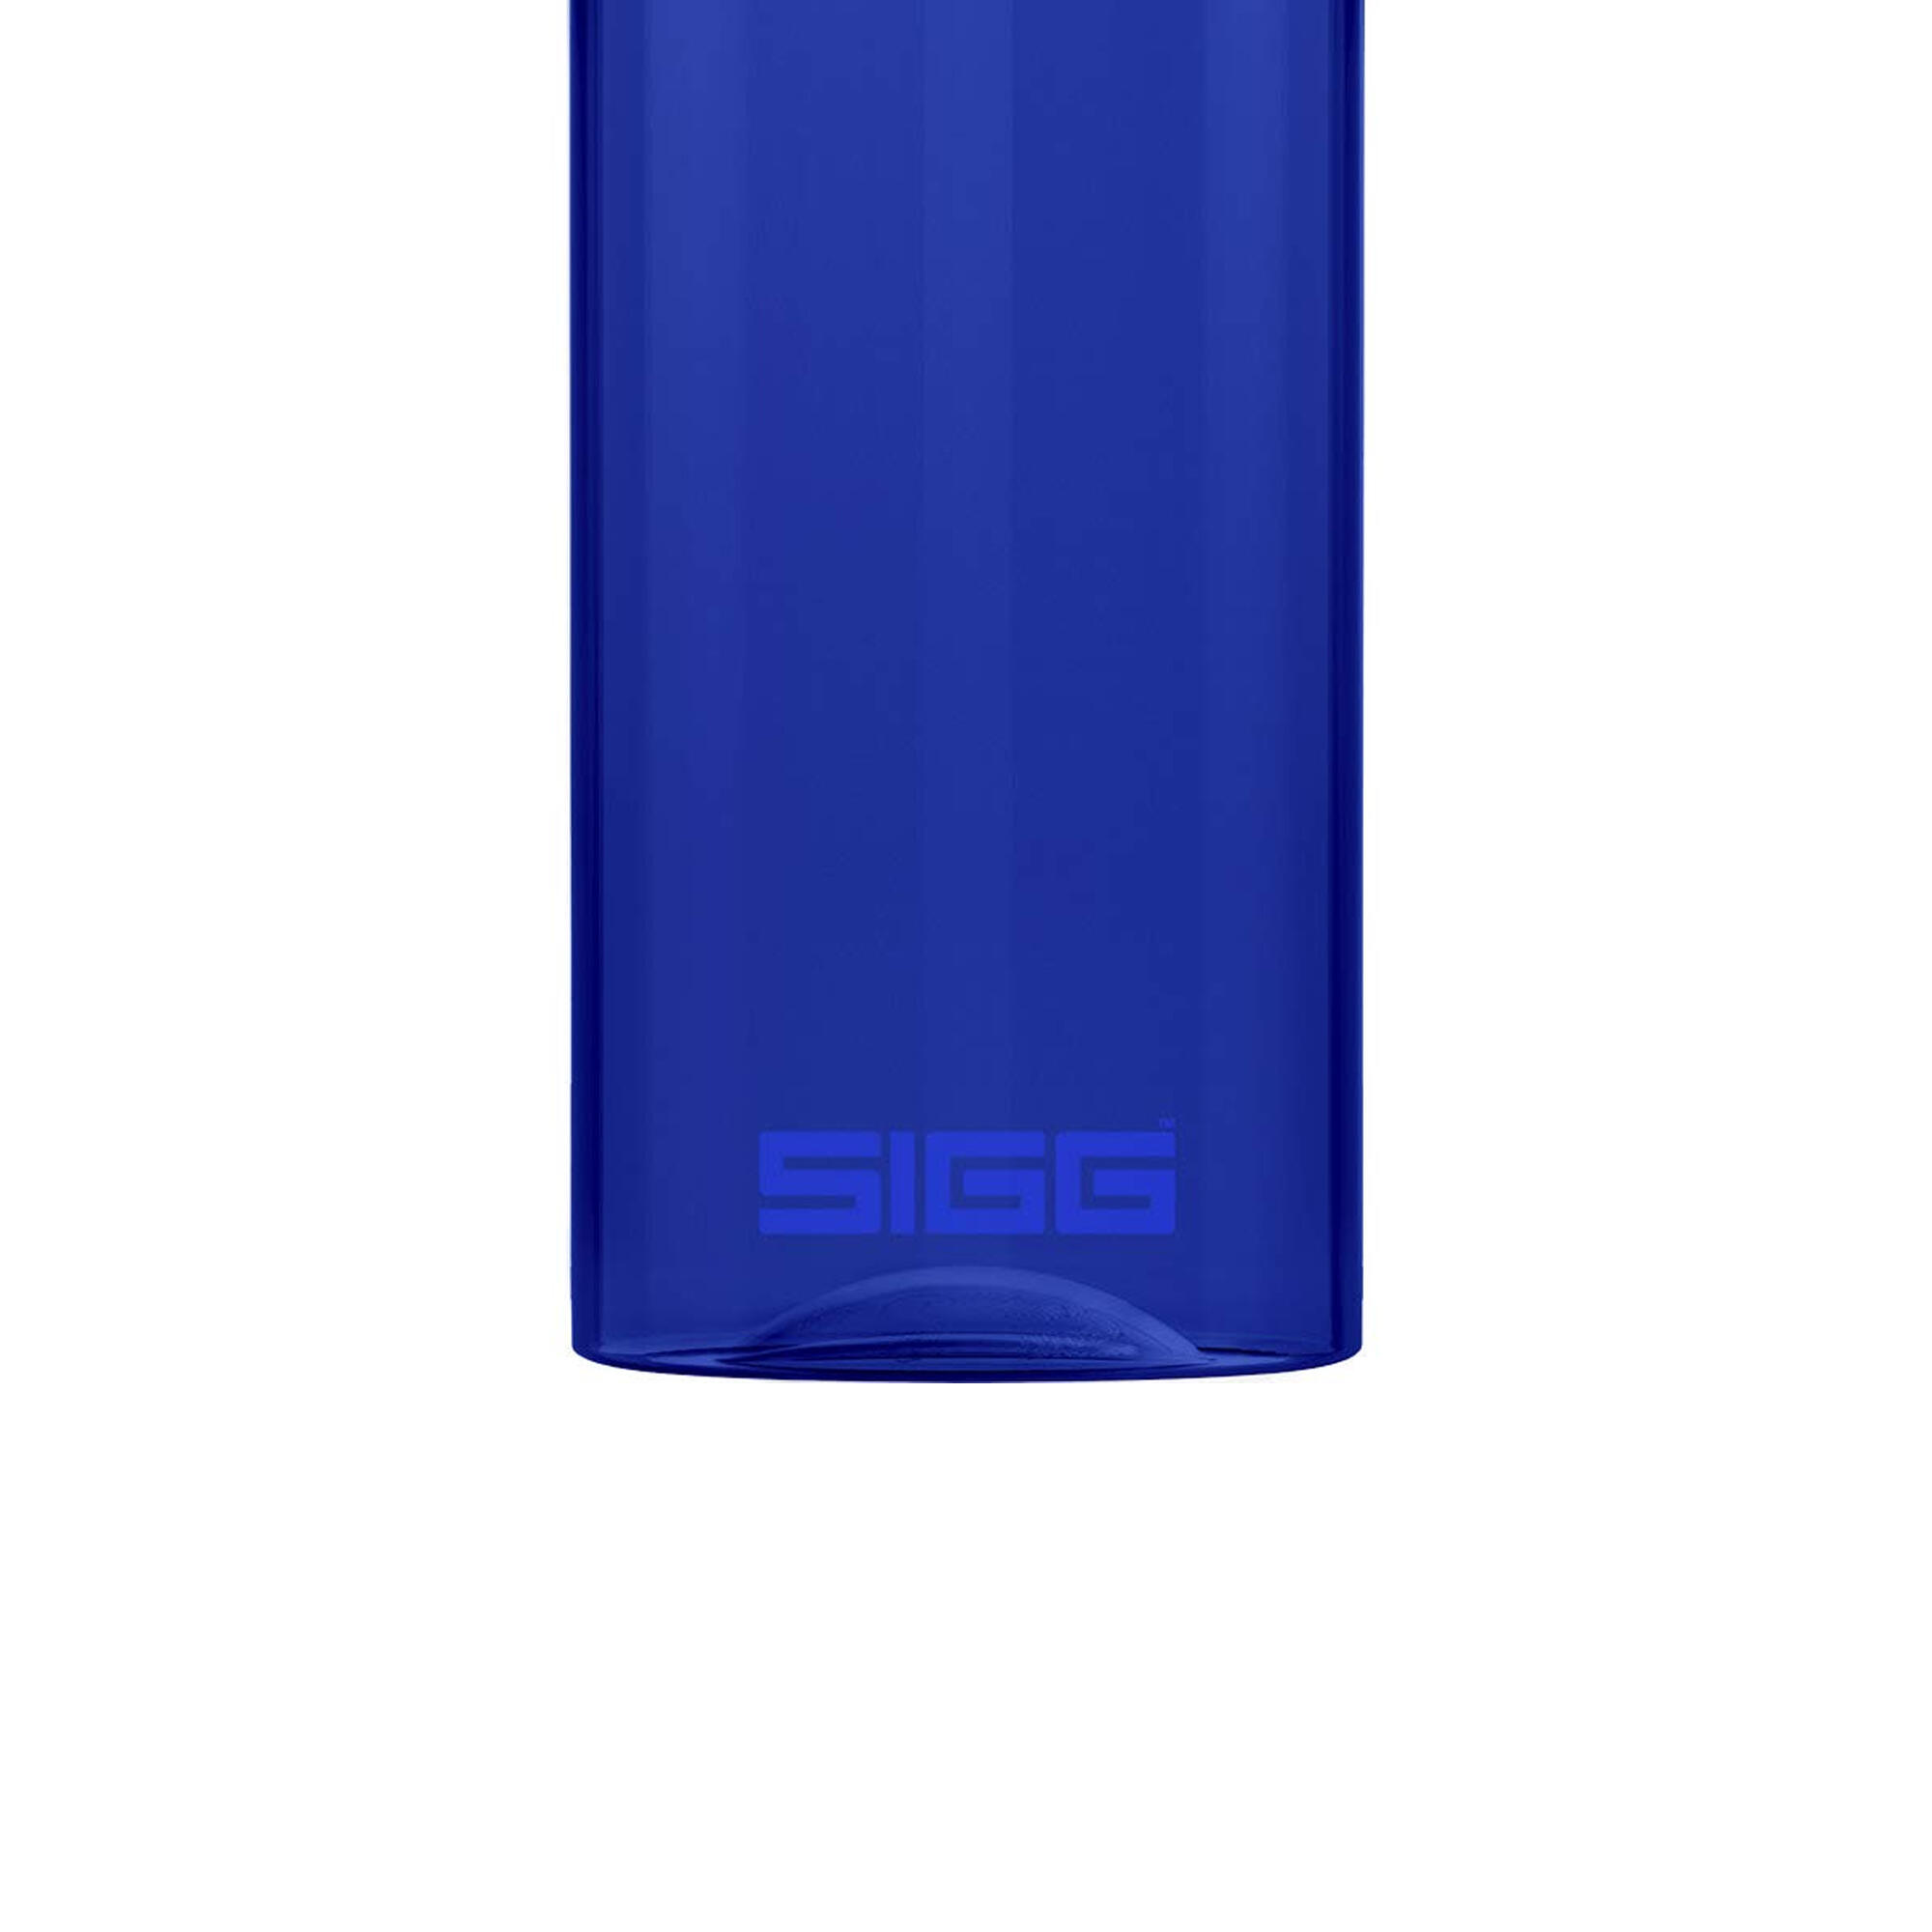 Total Color Water Bottle (Blue) 4/4